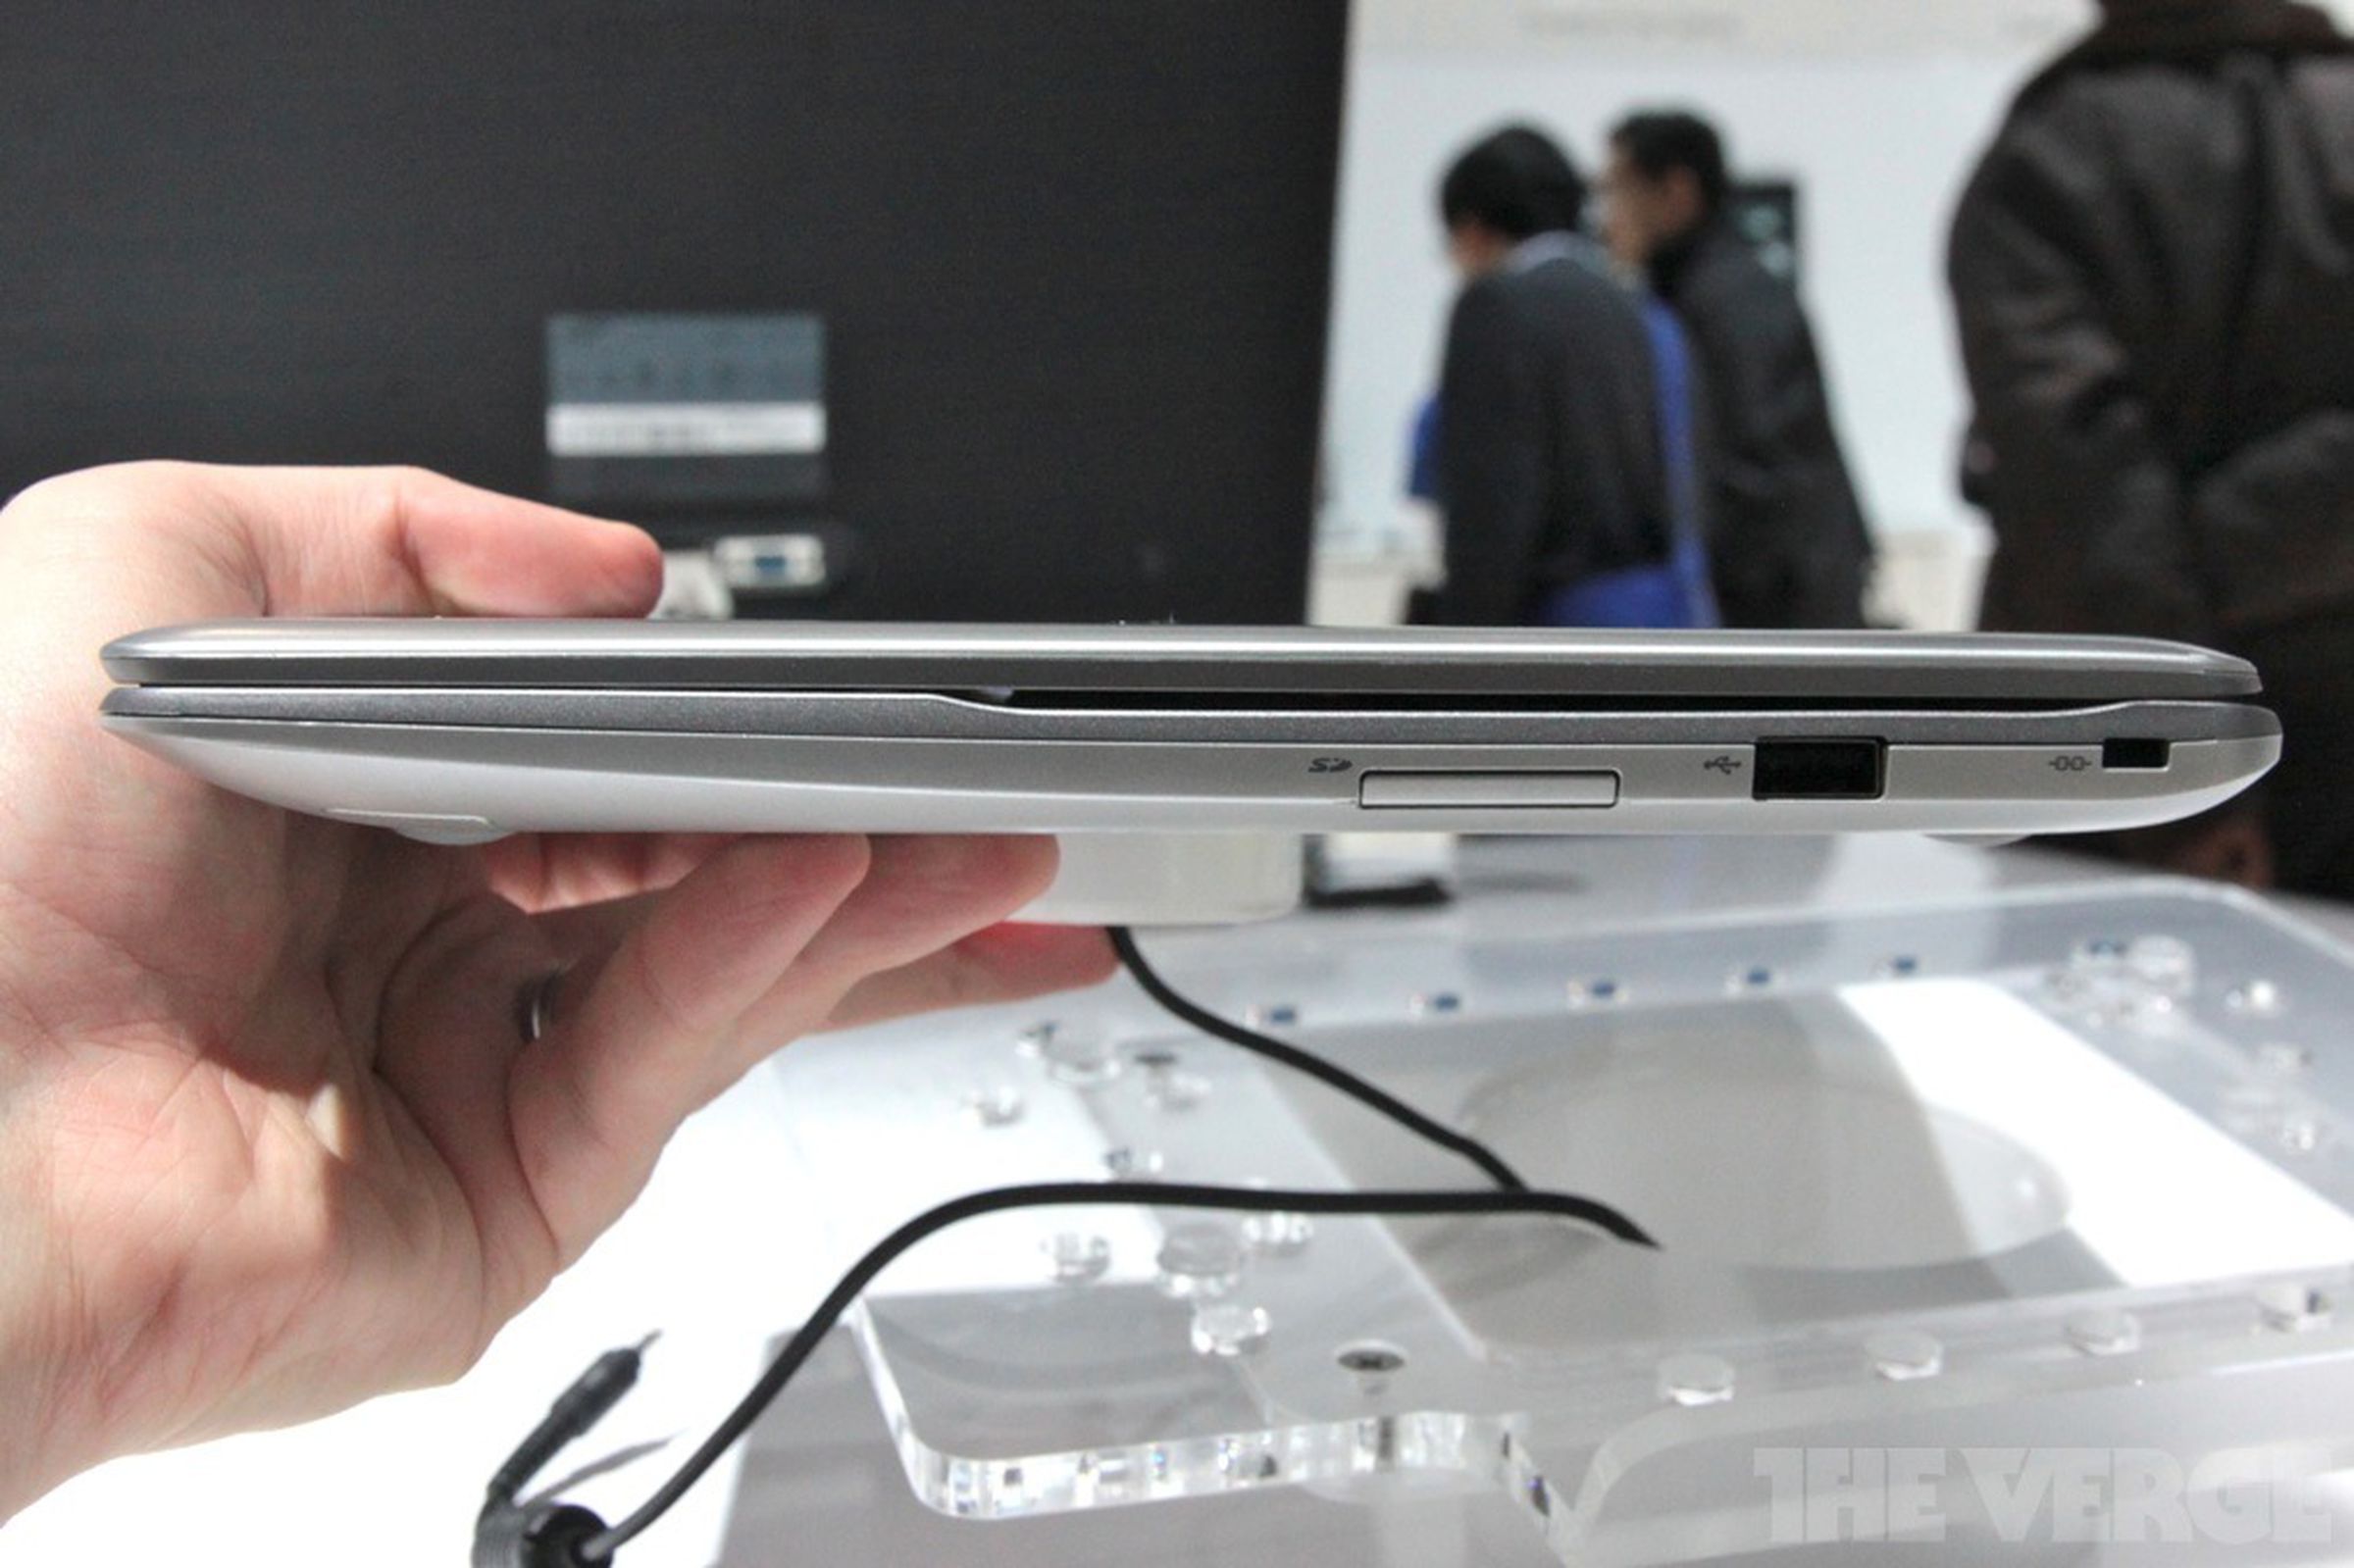 Samsung new Series 5 Chromebook hands-on photos